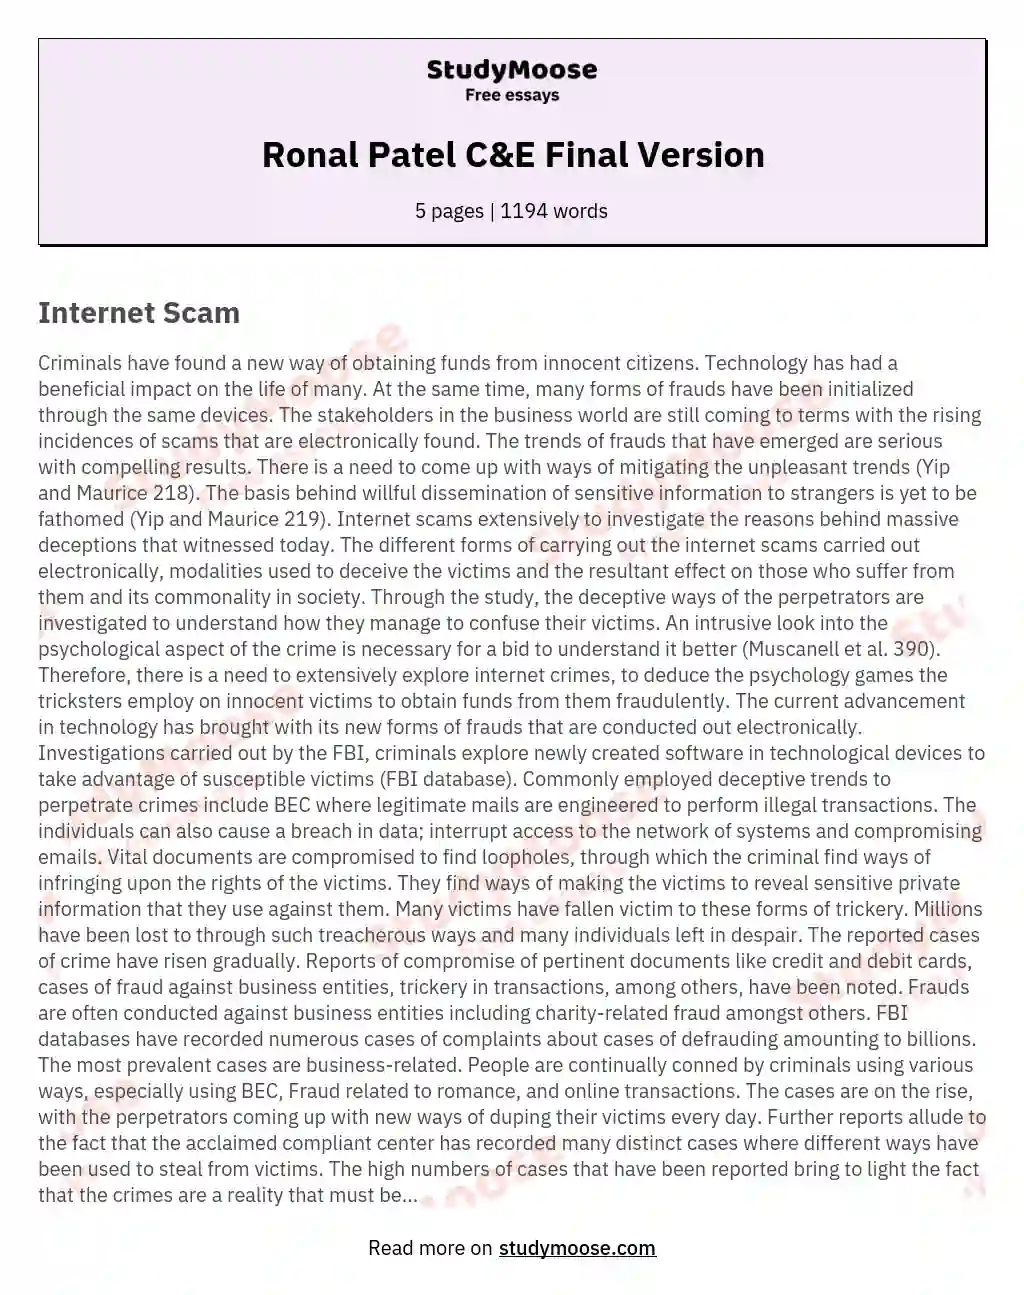 Ronal Patel C&E Final Version essay